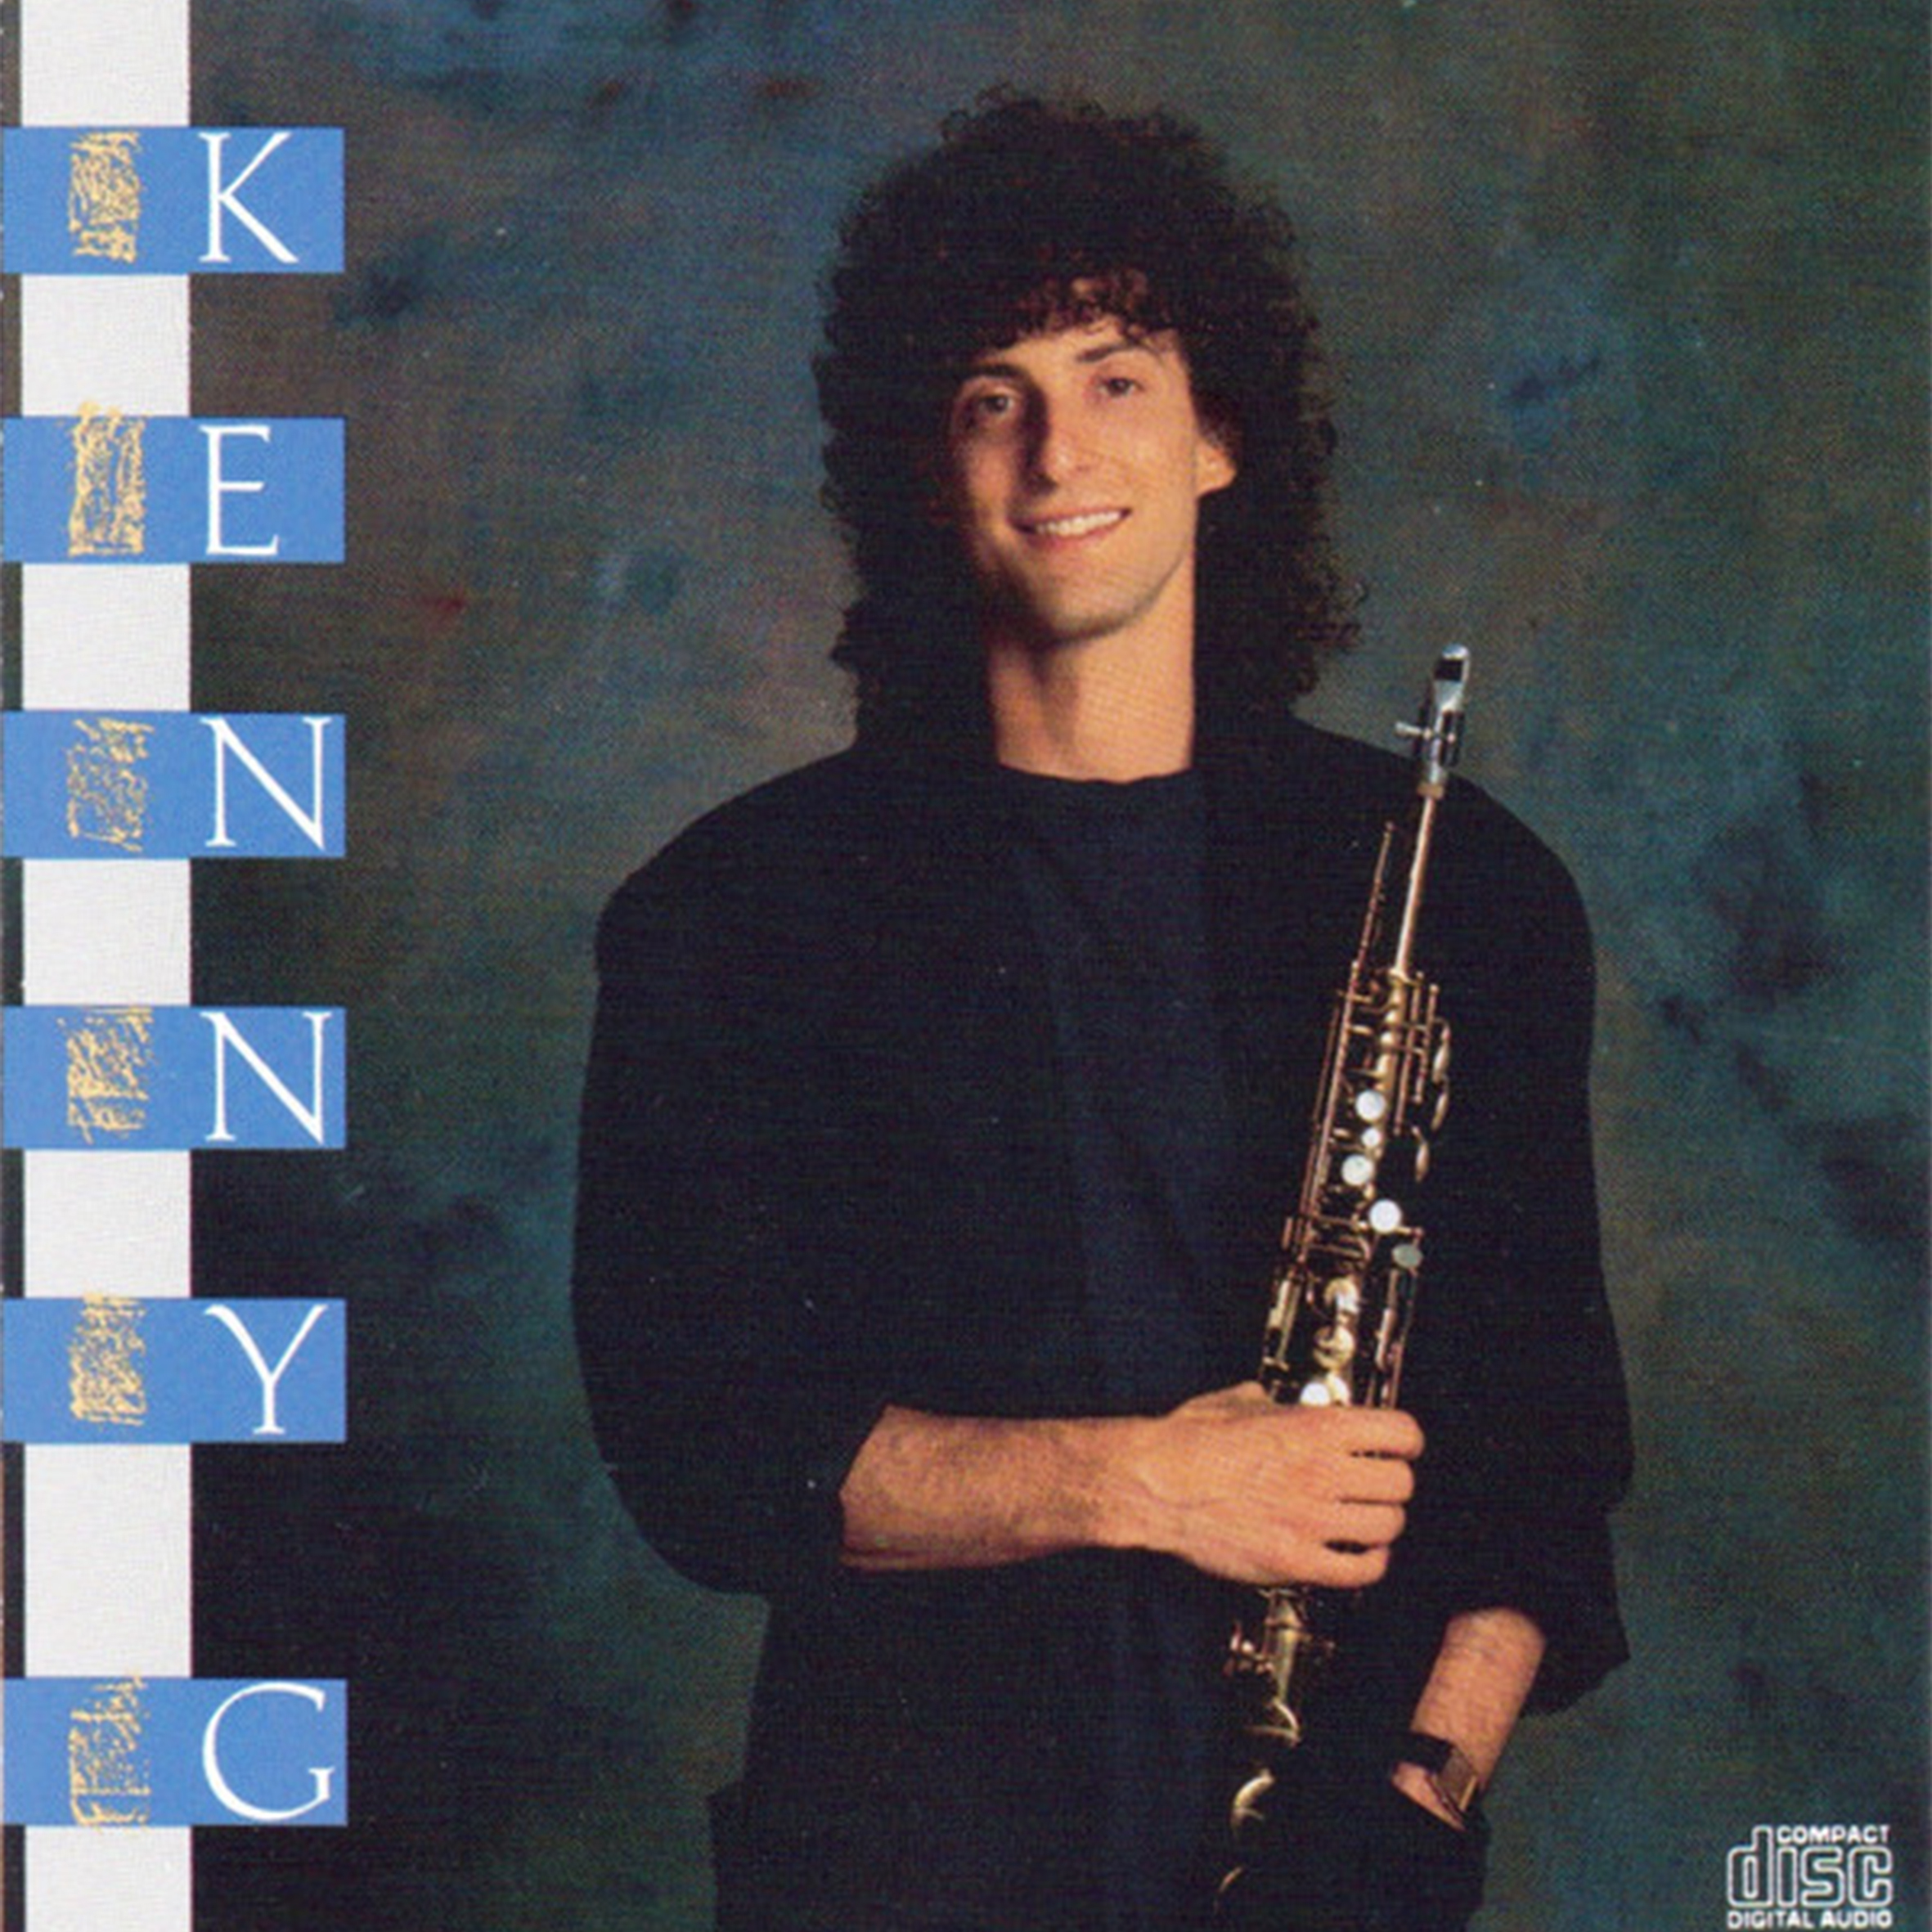 CD - Kenny G - 1989